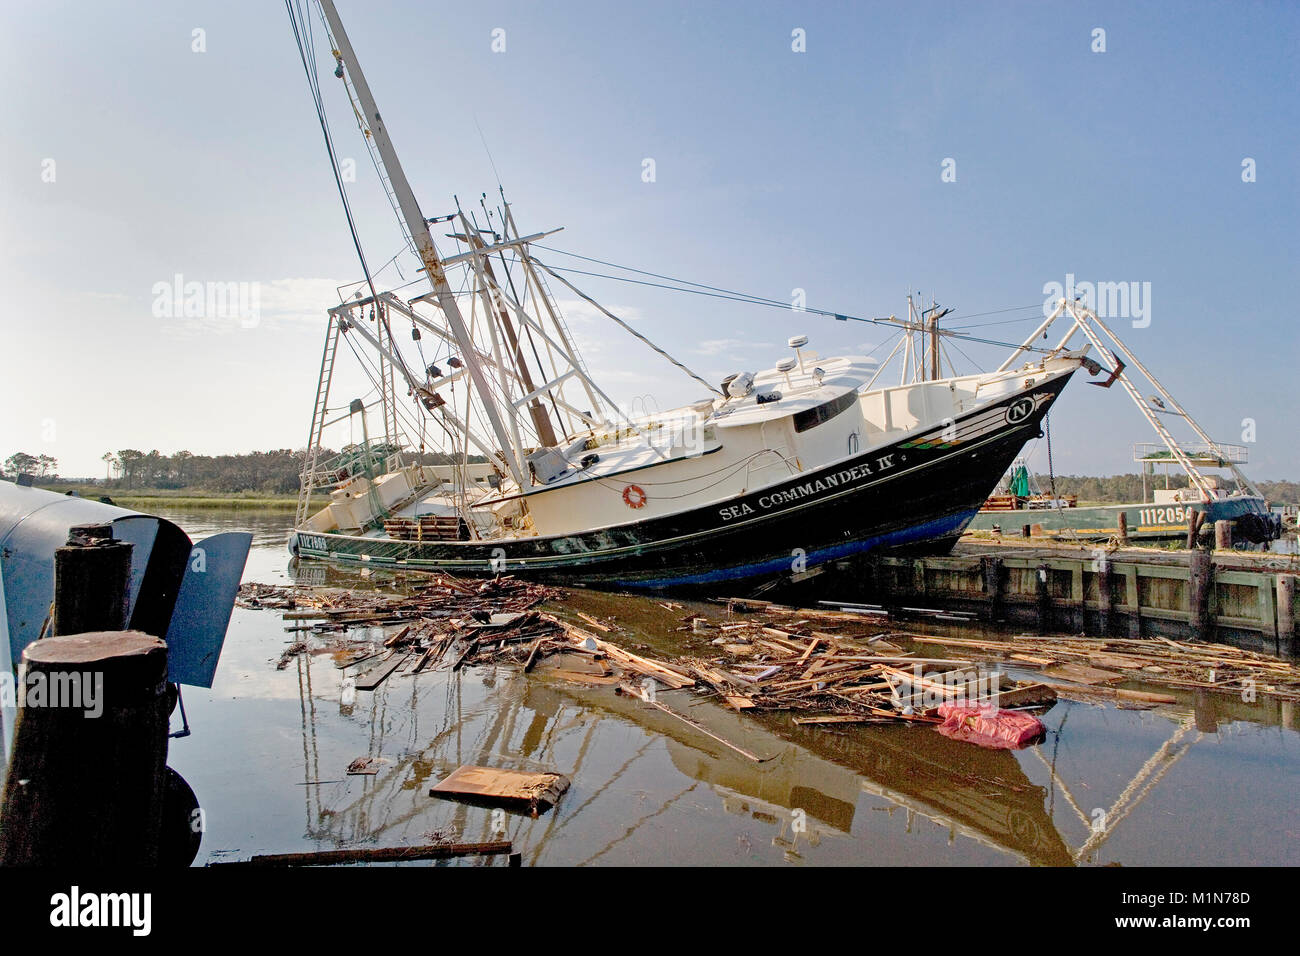 The deep sea trawler, Sea Commander IV,  left crashed upon the docks by the waves and storm surge at Bayou La Batre, Alabama after hurricane Katrina.  Stock Photo